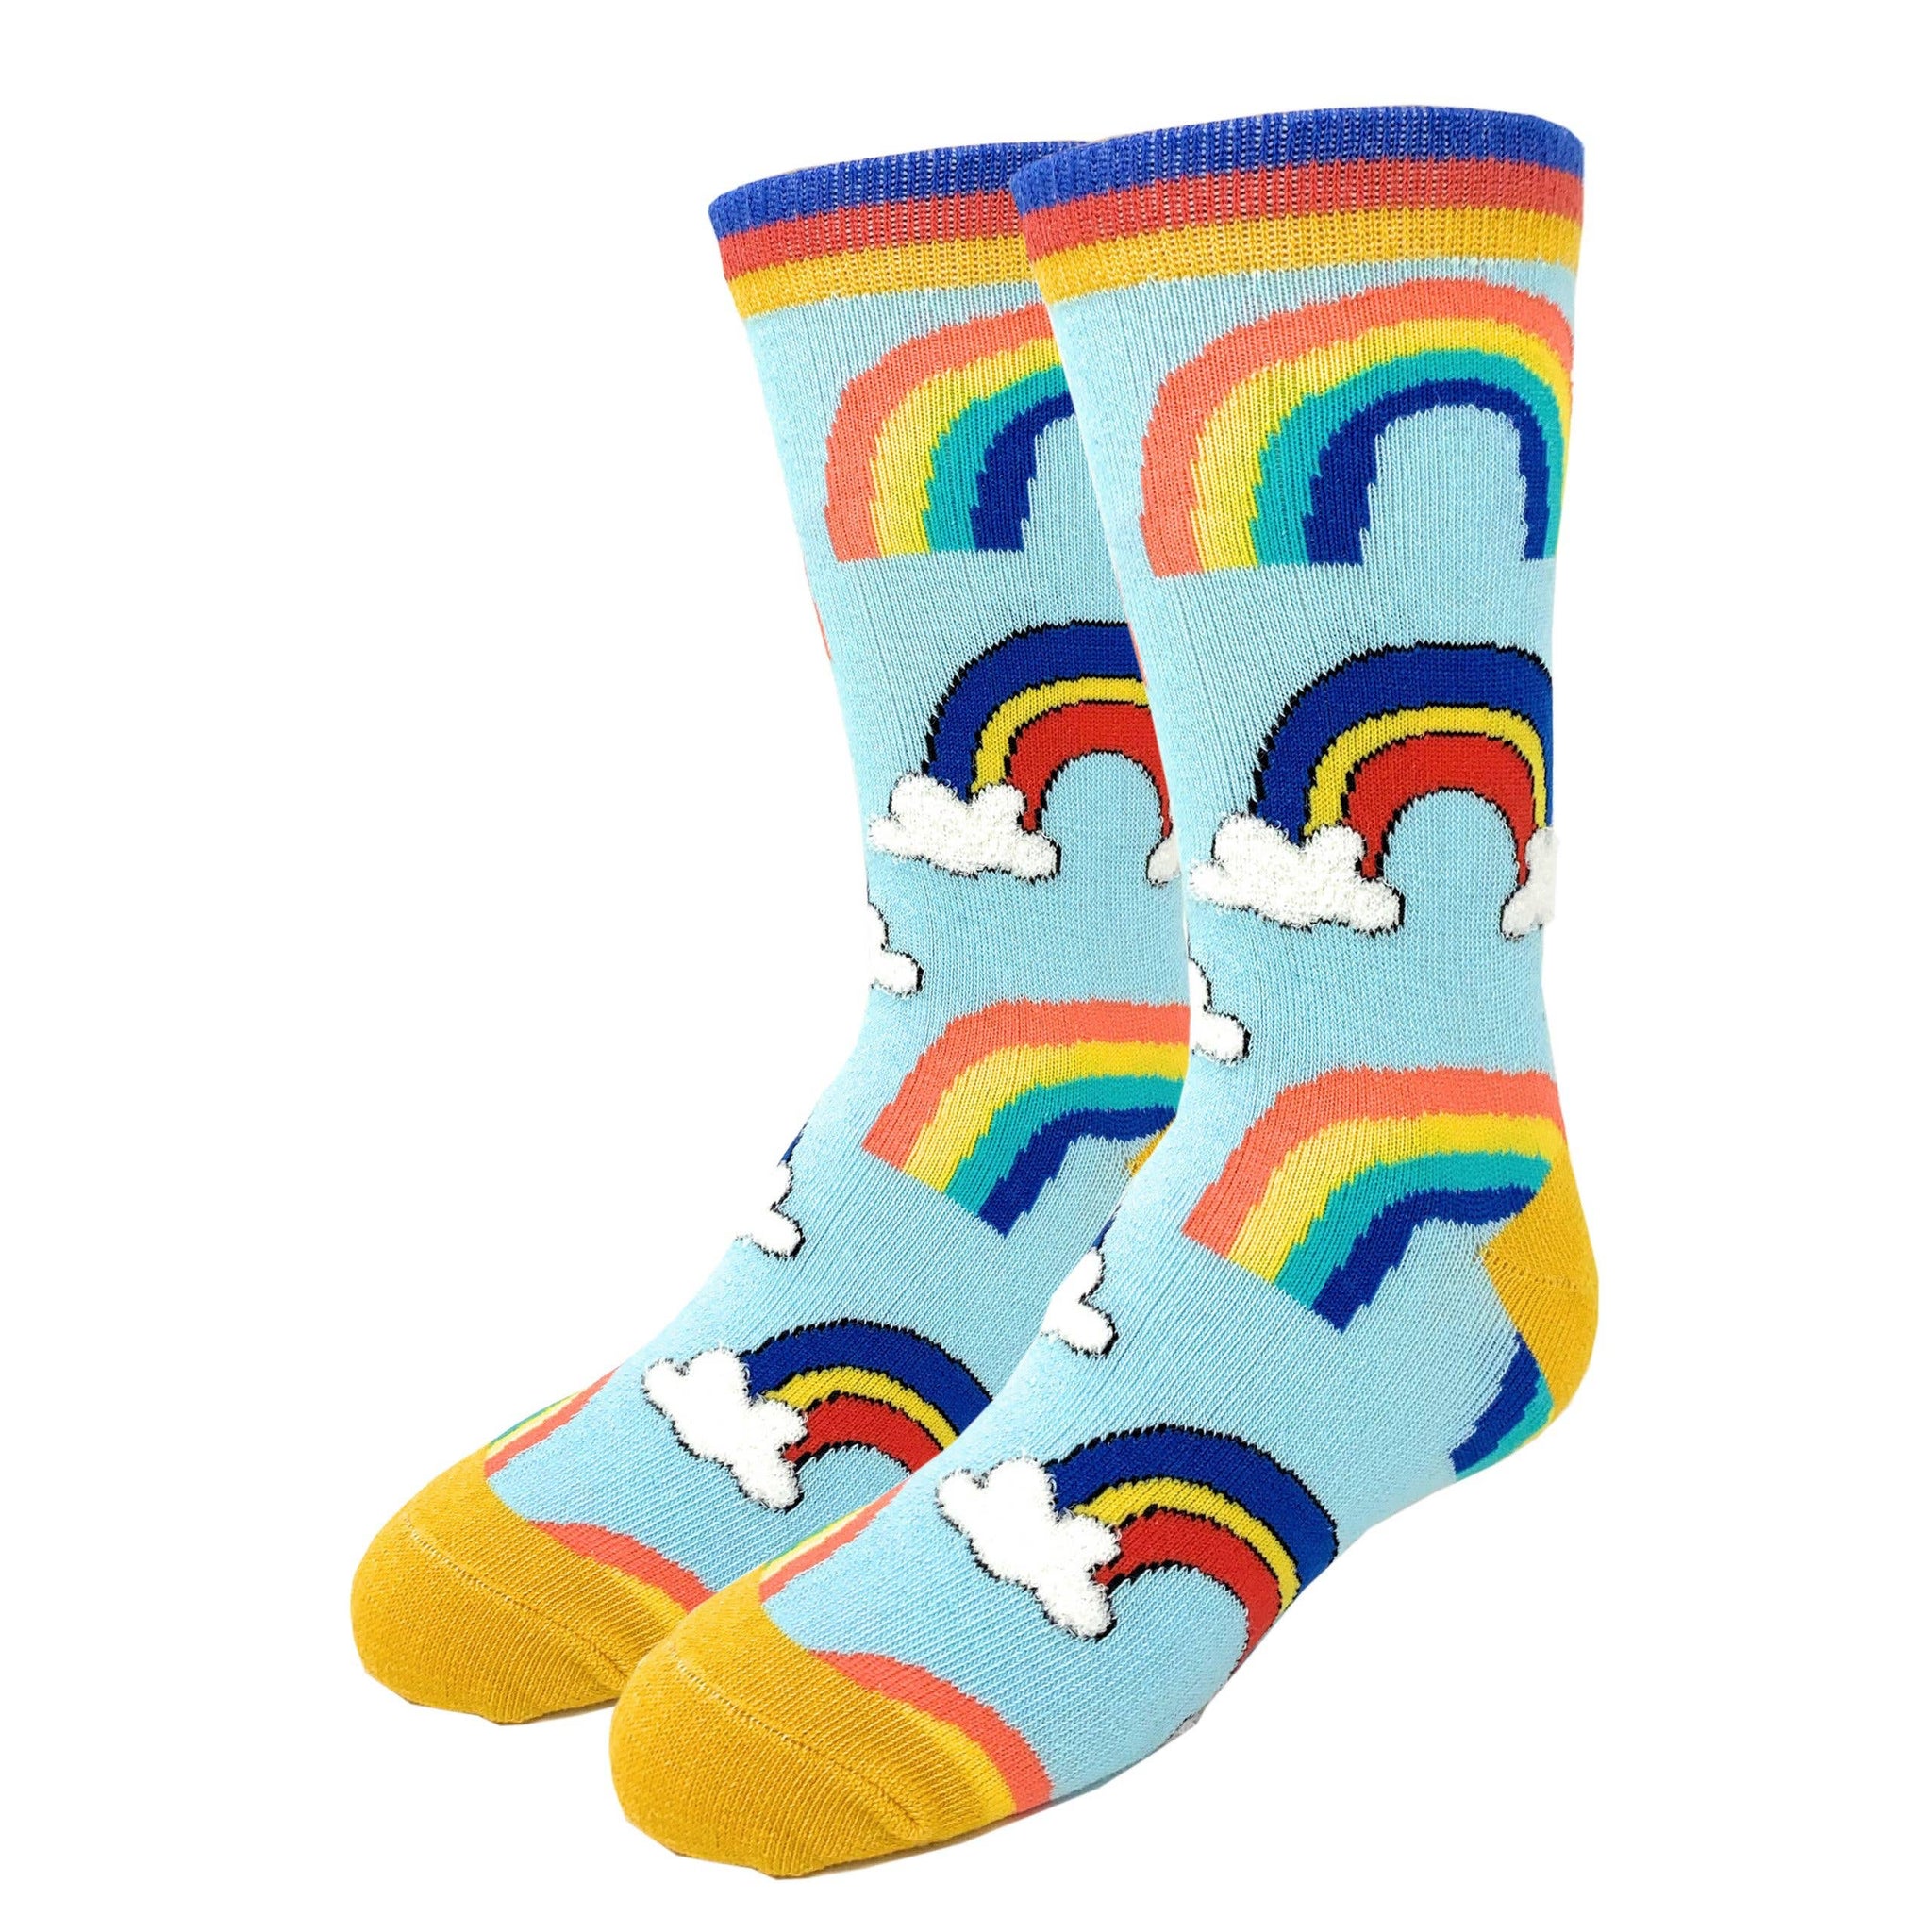 It's a Rainbow - Kid's Socks